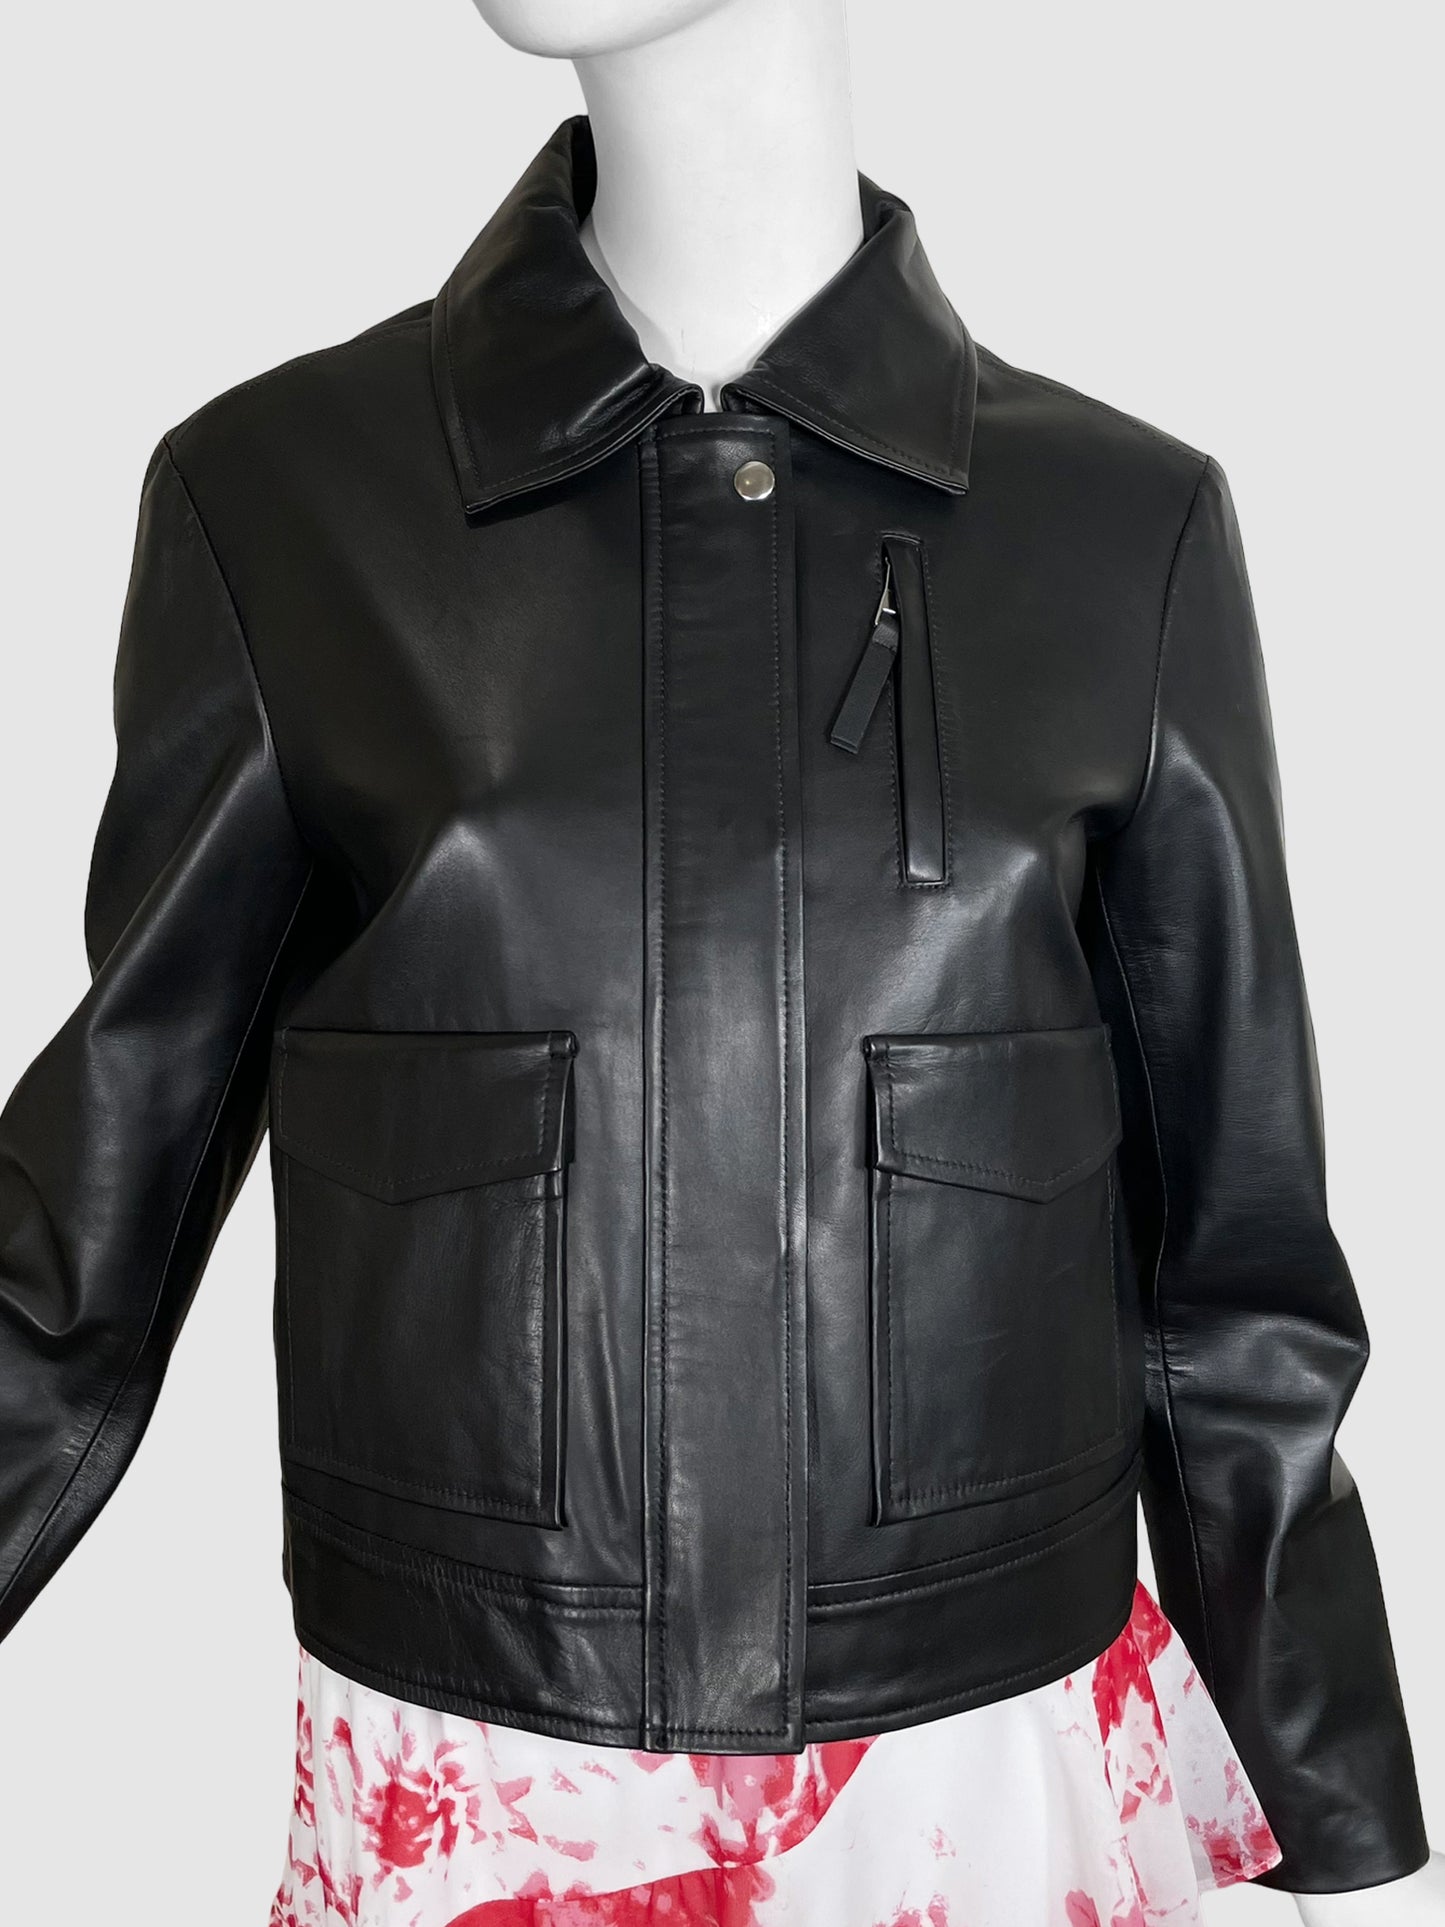 Club Monaco Leather Jacket - Size M